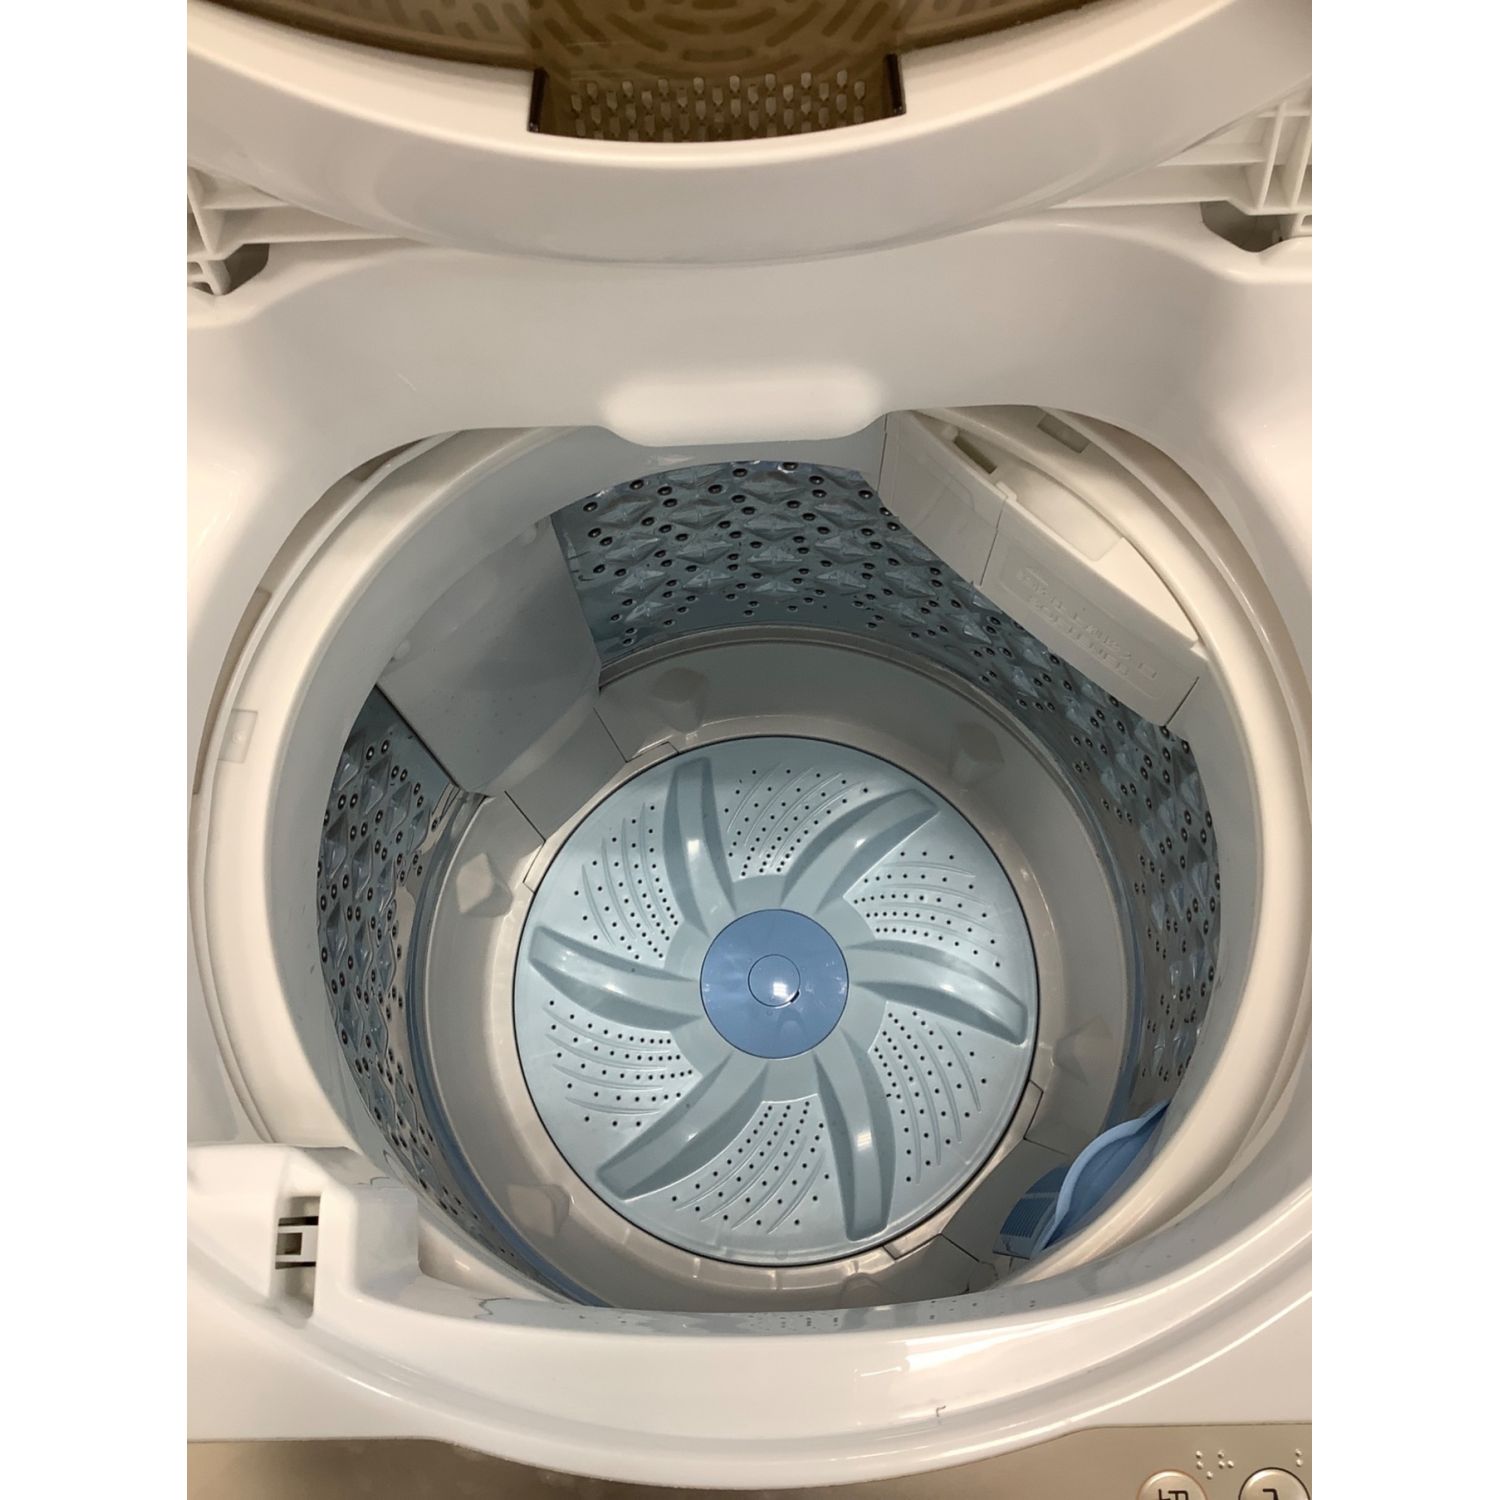 TOSHIBA (トウシバ) 全自動洗濯機 5.0kg AW-5G8 2020年製｜トレファク